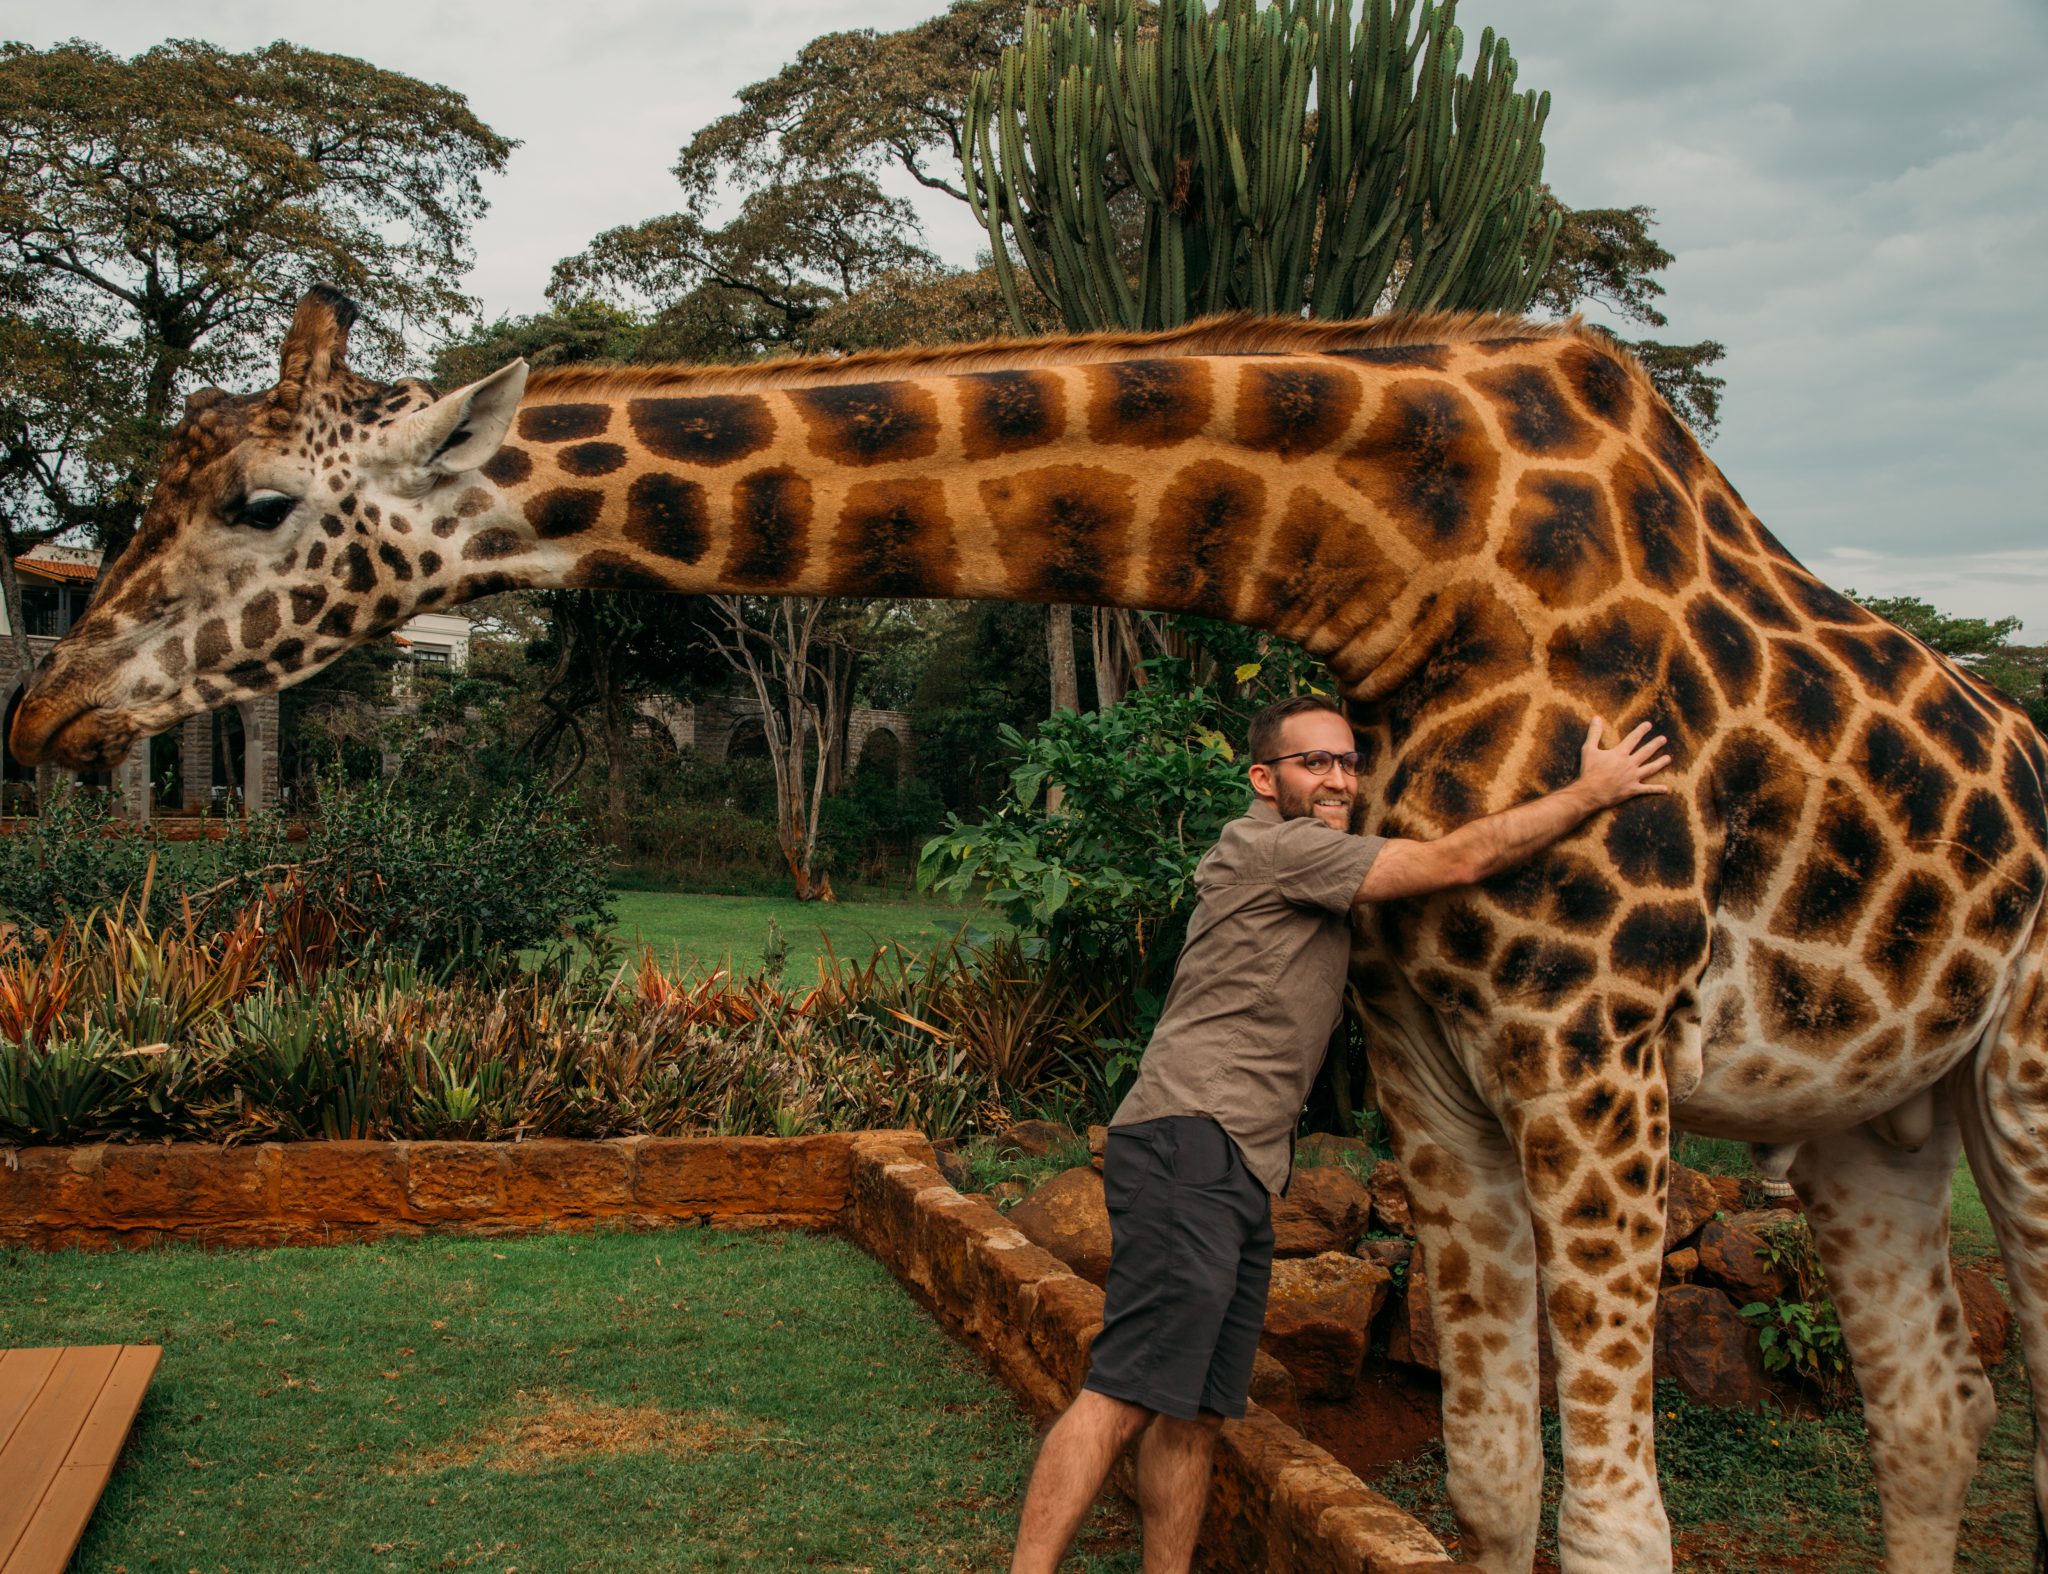 Hugging a giraffe at Giraffe Manor